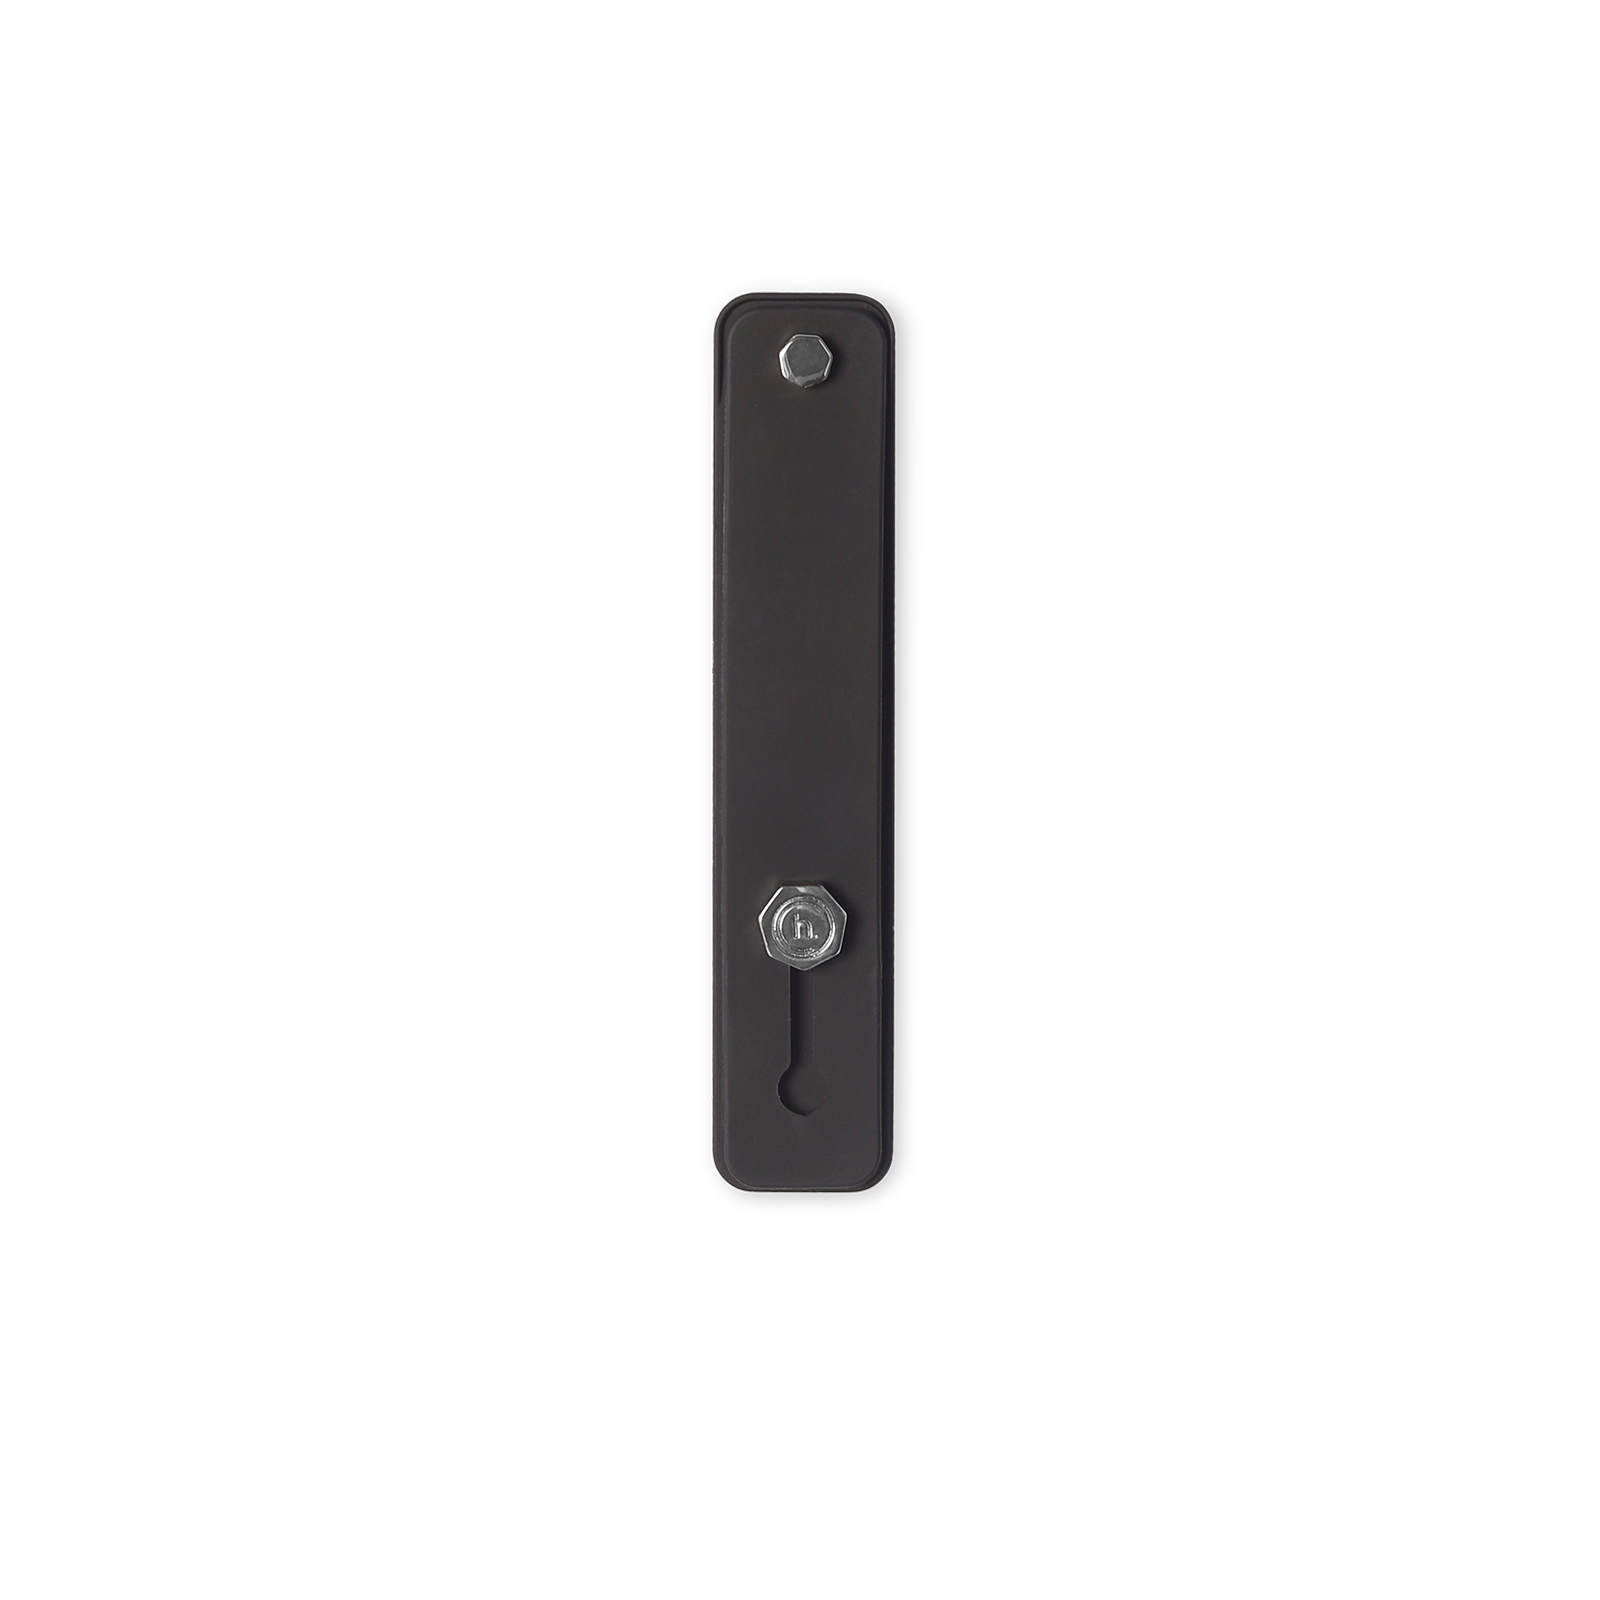 Finger strap, attachable phone grip, black